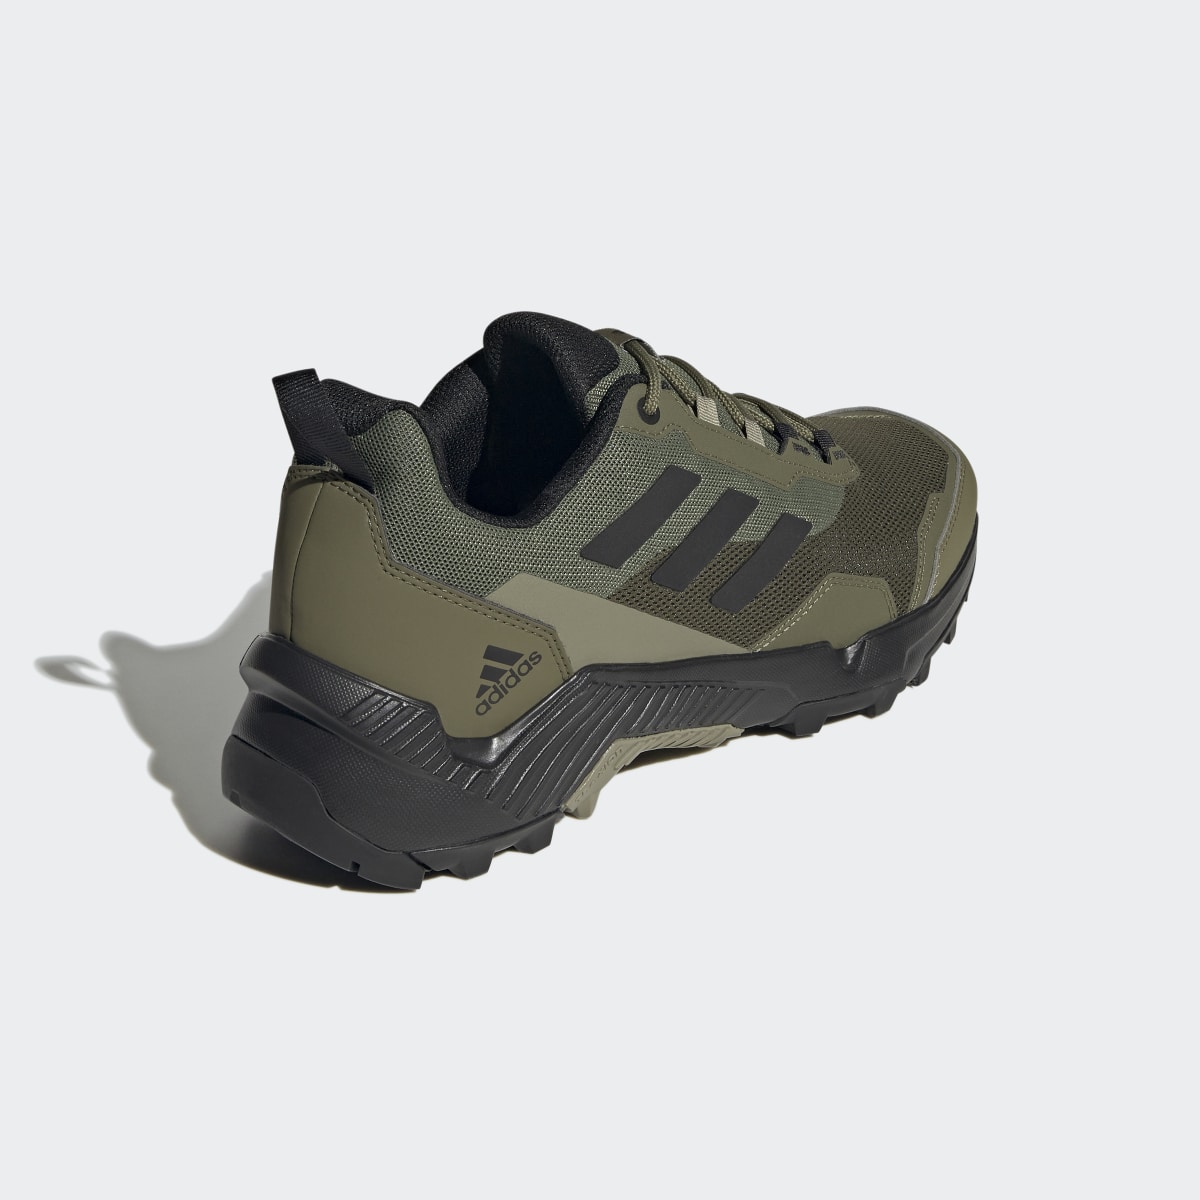 Adidas Chaussure de randonnée Eastrail 2.0. 6